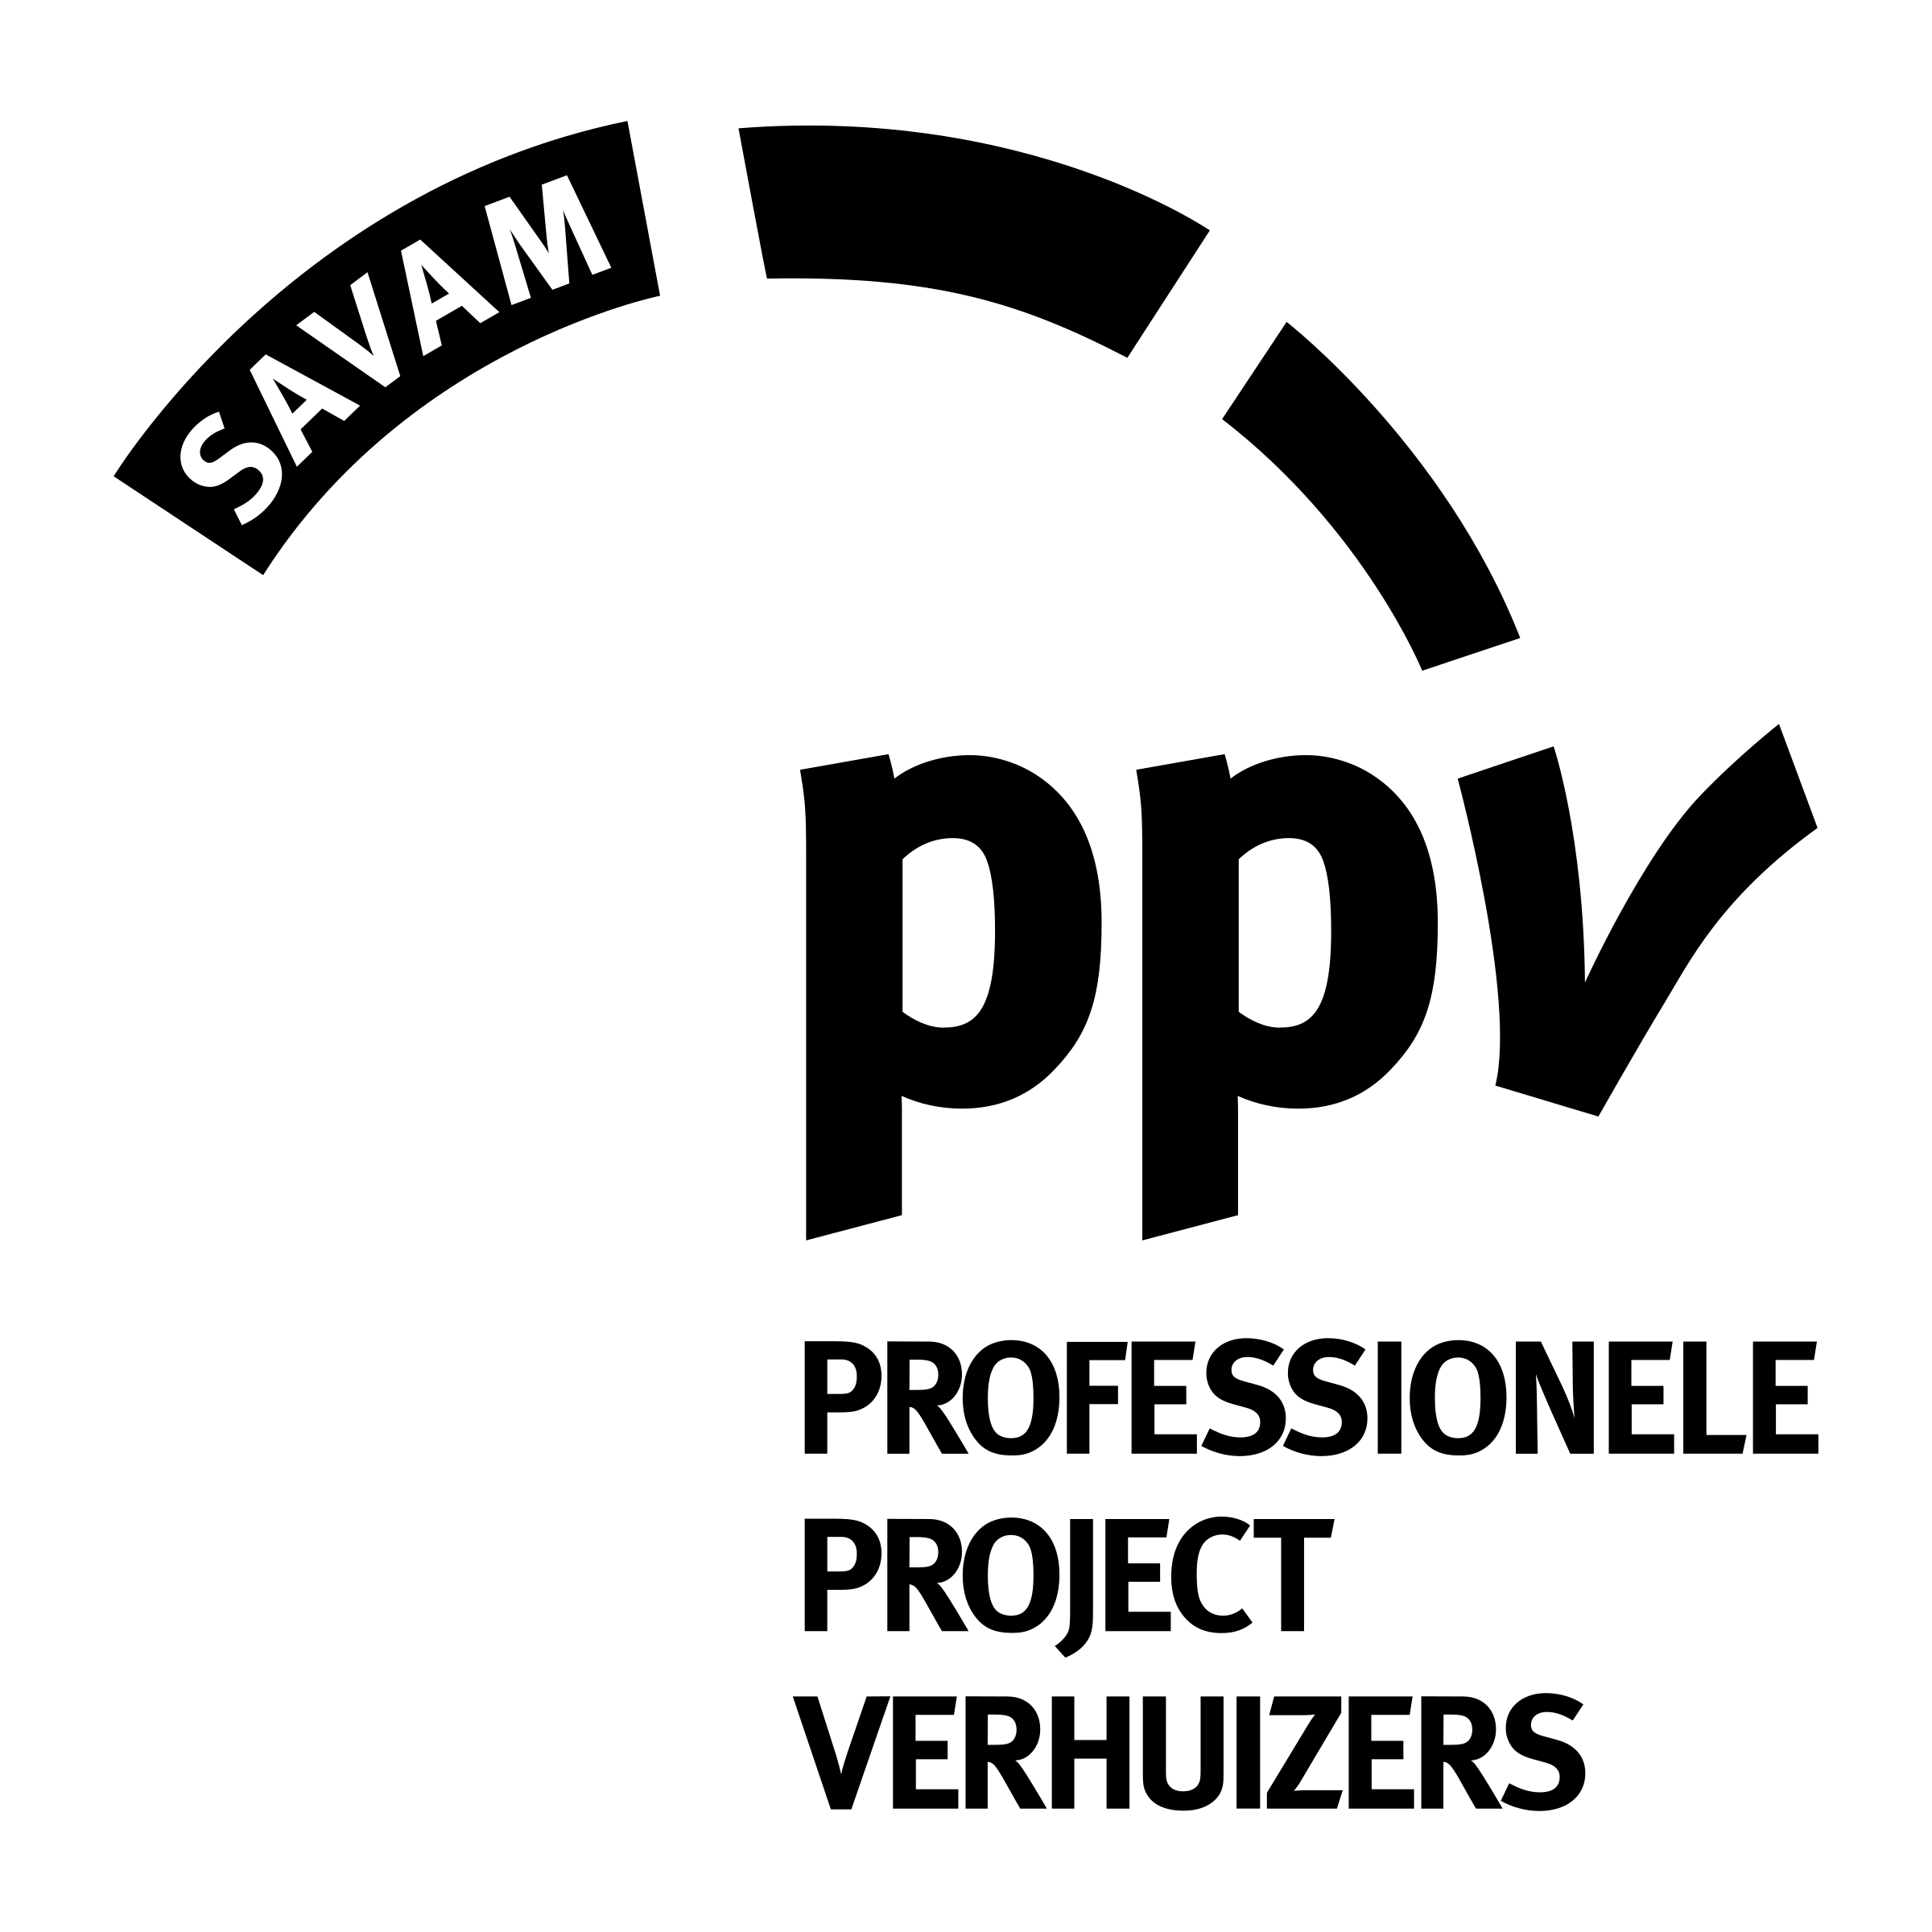 PPV Logo - PPV Logo PNG Transparent & SVG Vector - Freebie Supply